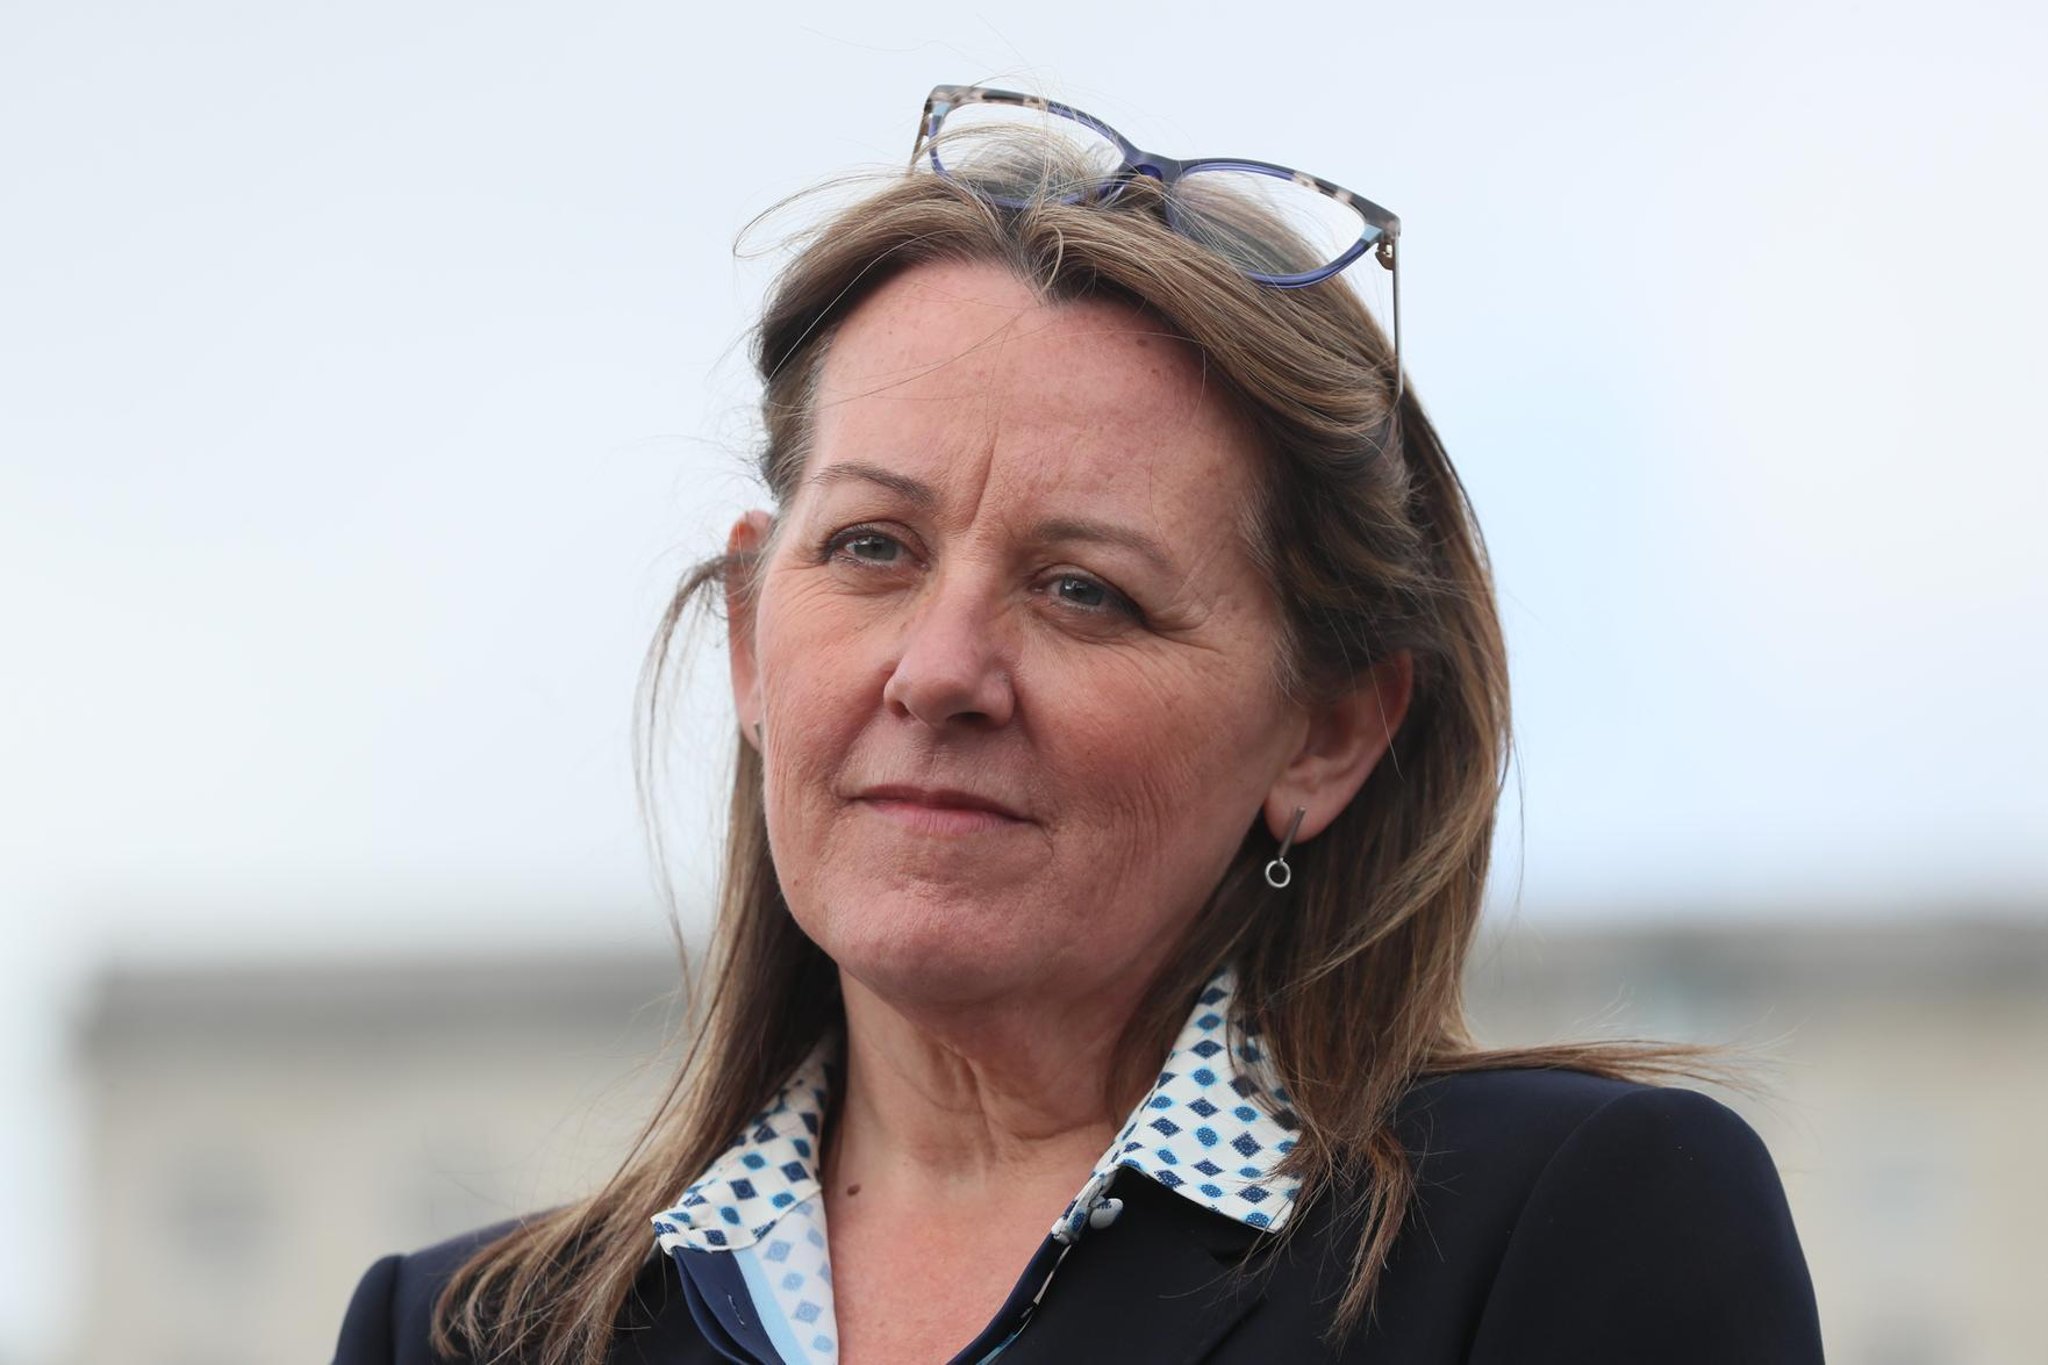 DUP deputy leader Paula Bradley will not seek re-election for family reasons